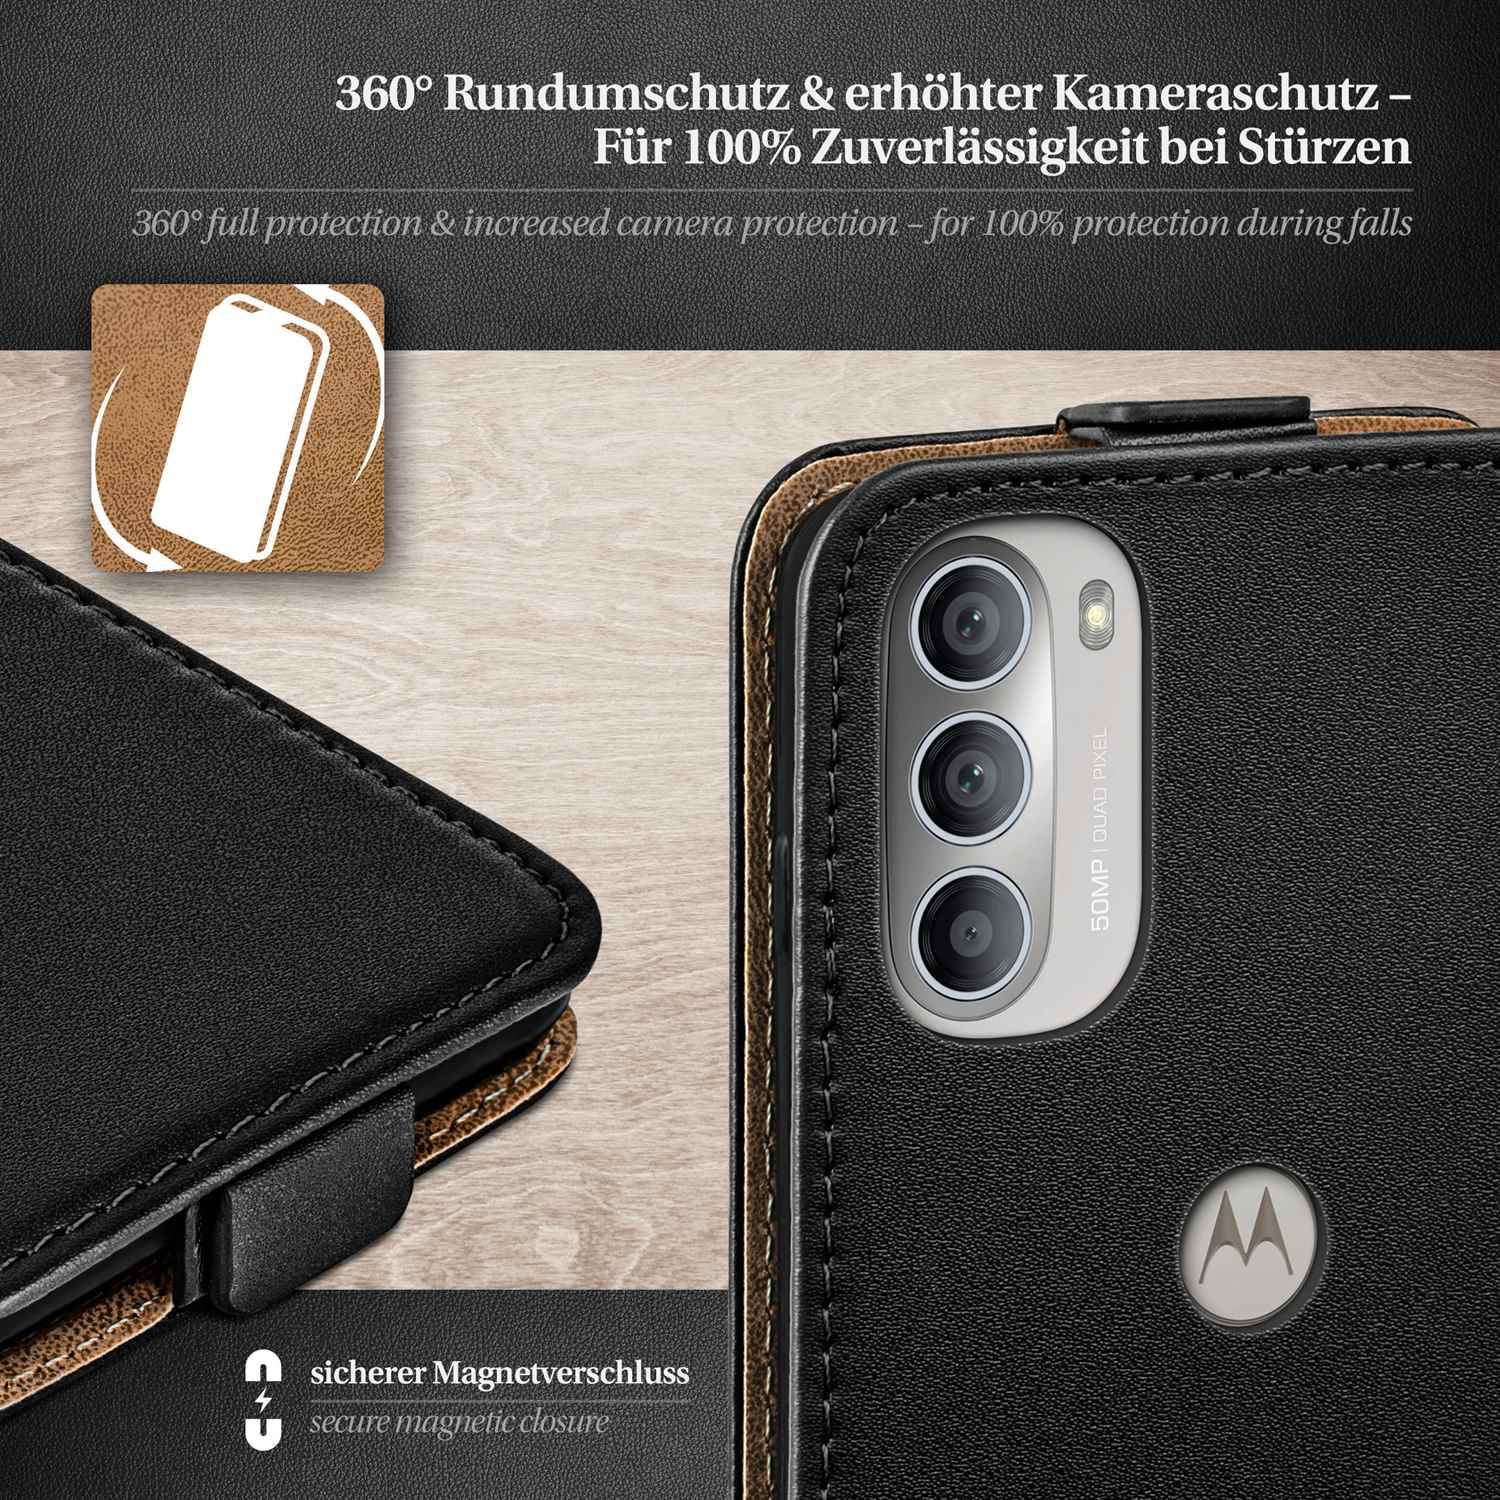 5G, Cover, Moto Motorola, Flip Case, MOEX G51 Flip Deep-Black